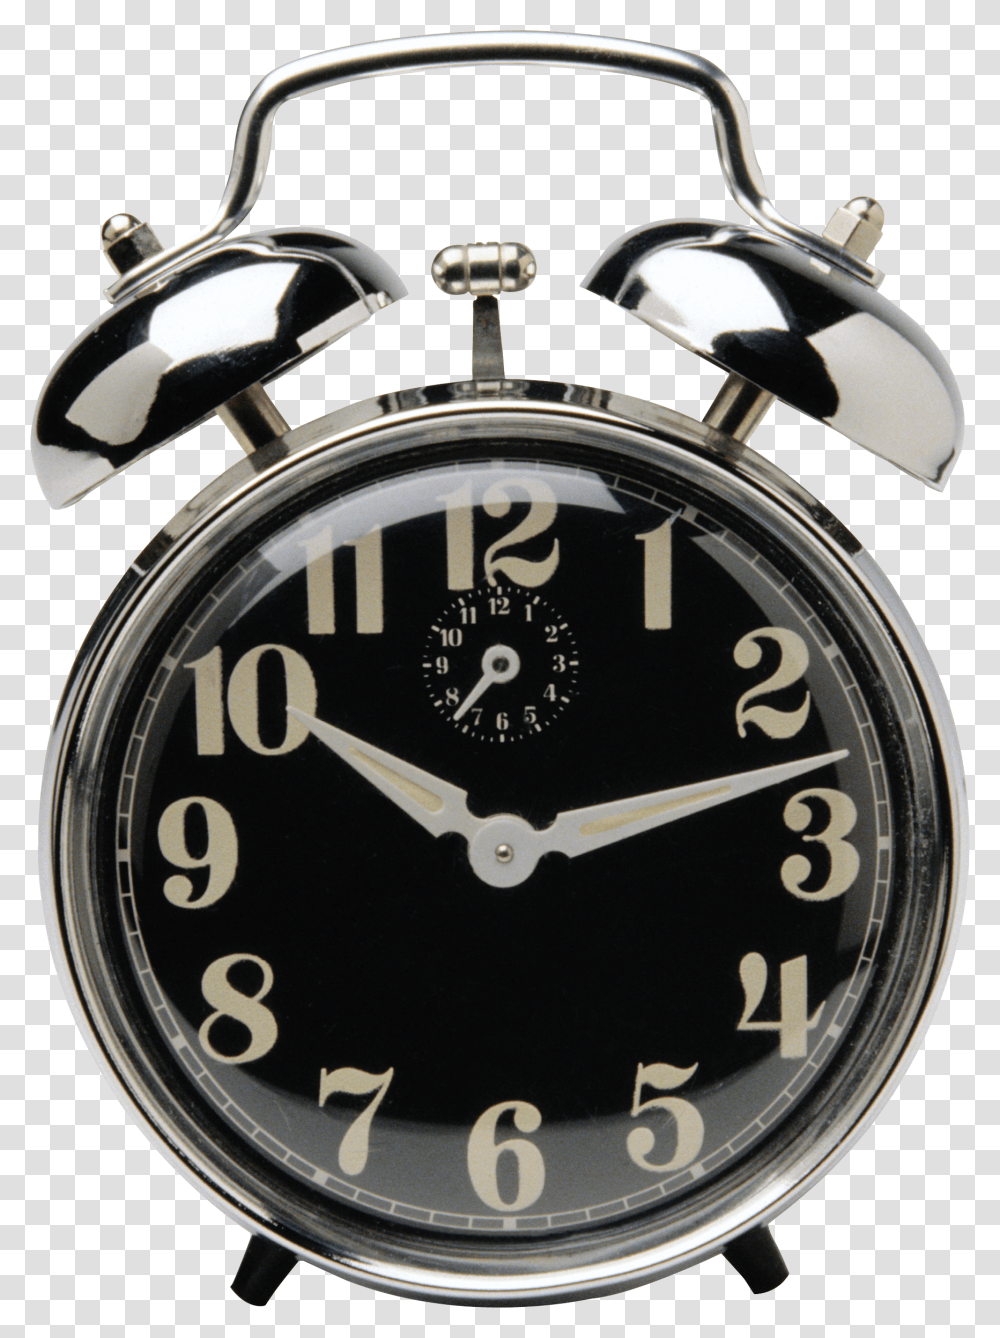 Alarm Clock Animated Ticking Clock, Clock Tower, Architecture, Building, Wristwatch Transparent Png